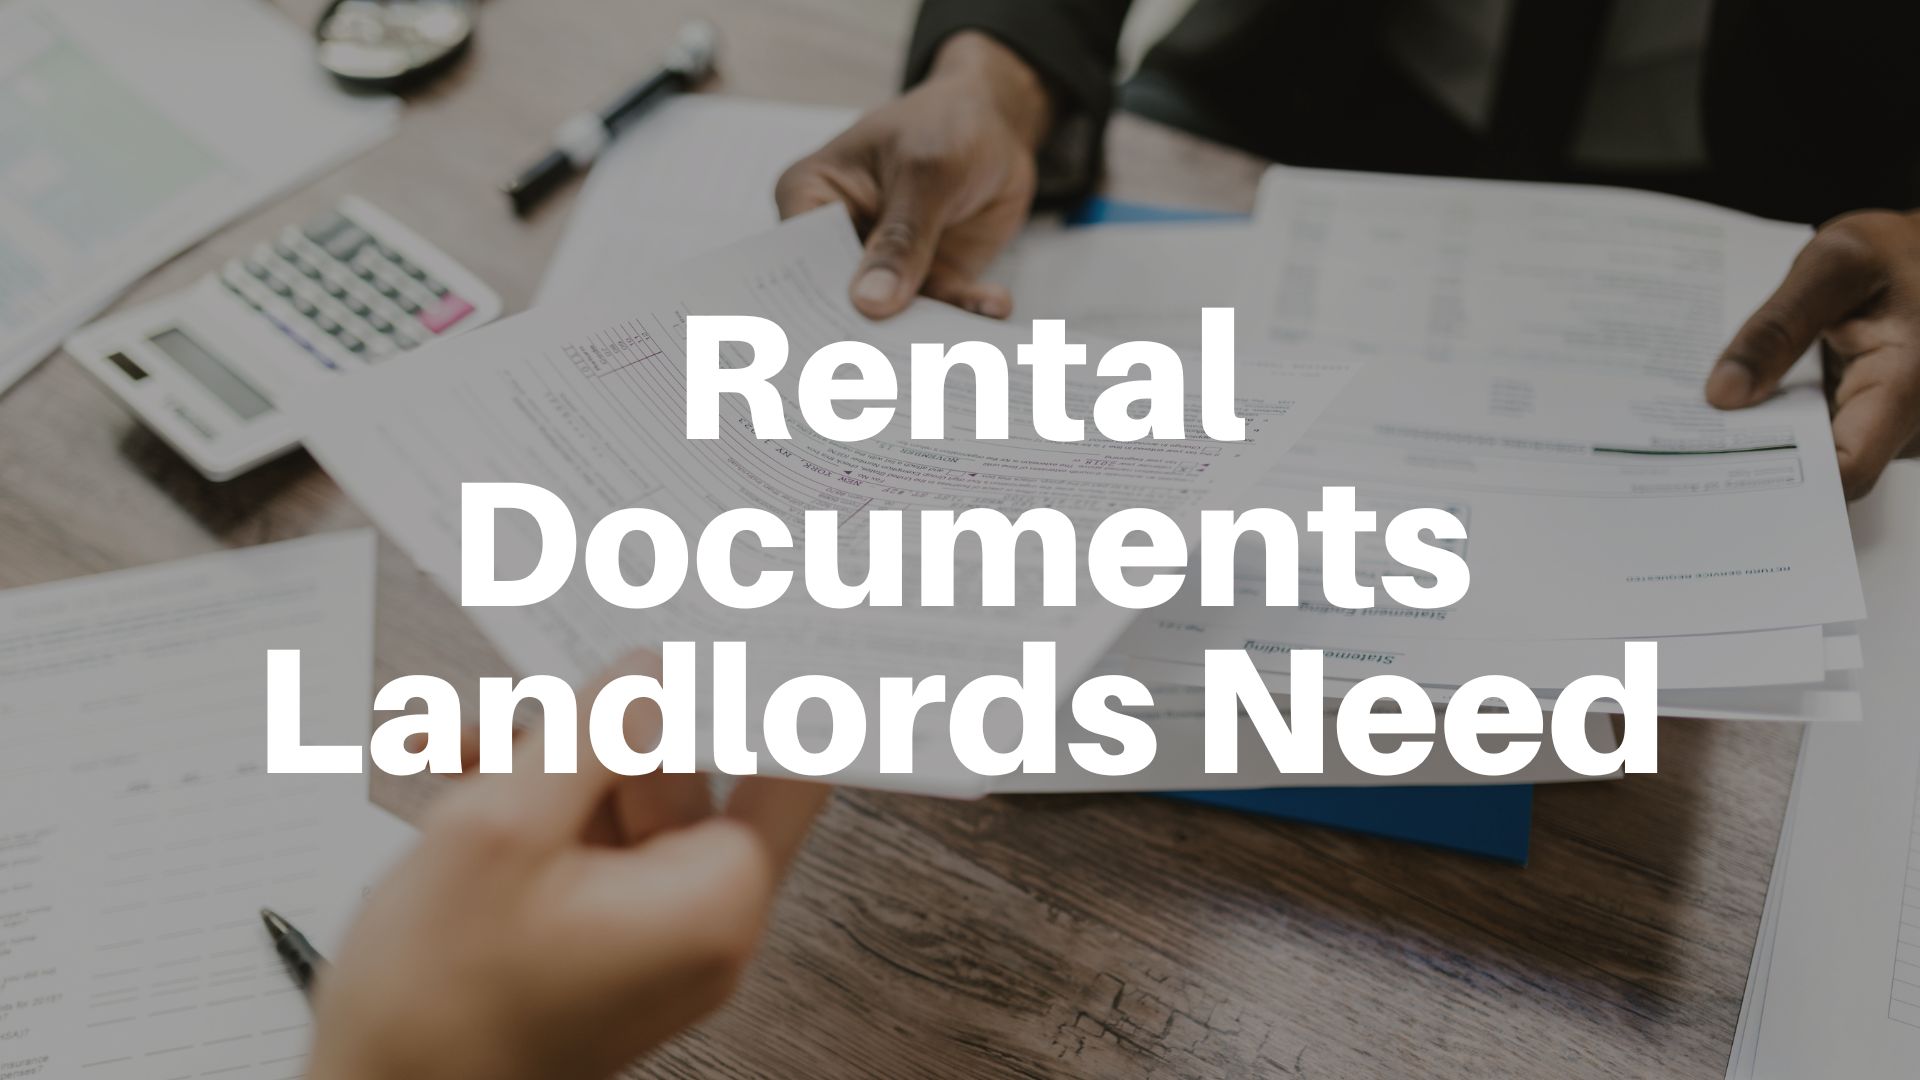 rental-documents-needed-header